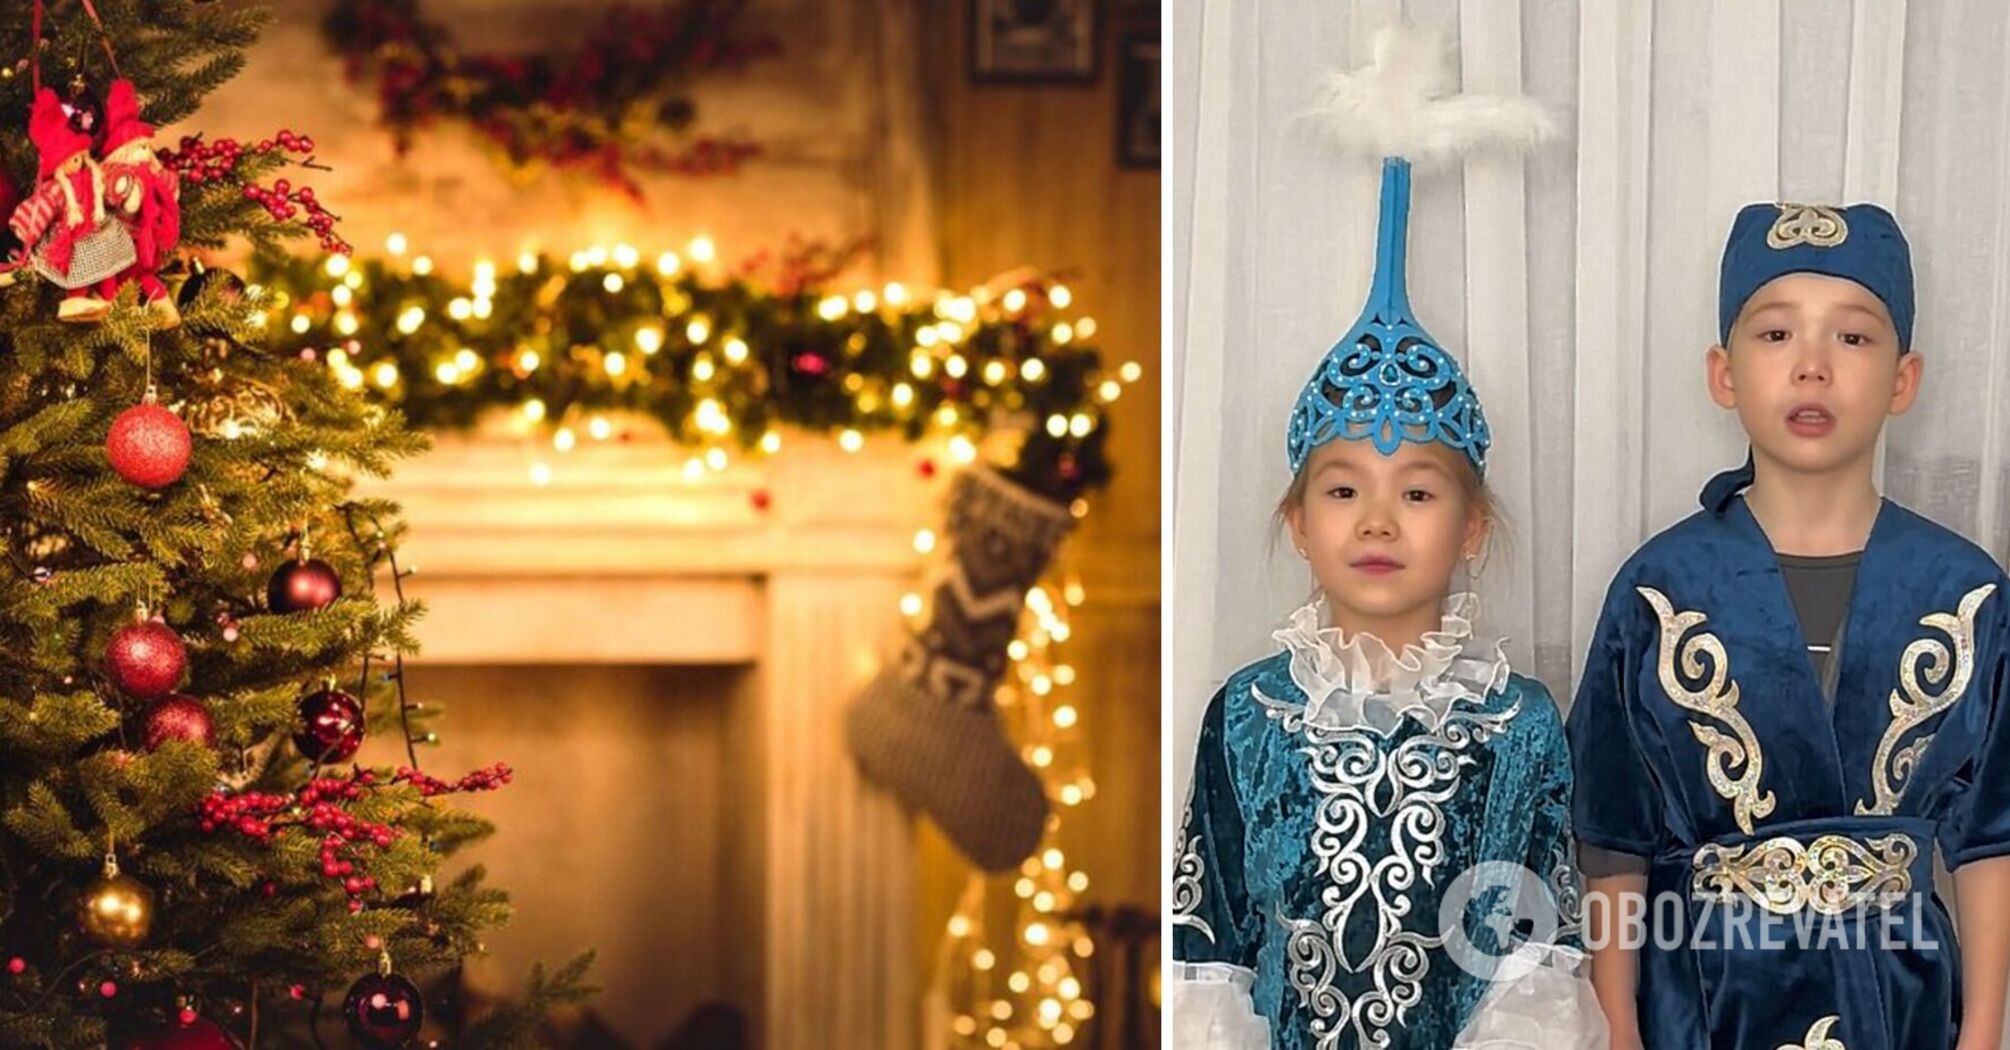 Kazakh children wished Ukrainians Happy New Year in Ukrainian, touching netizens: even AFU reacted